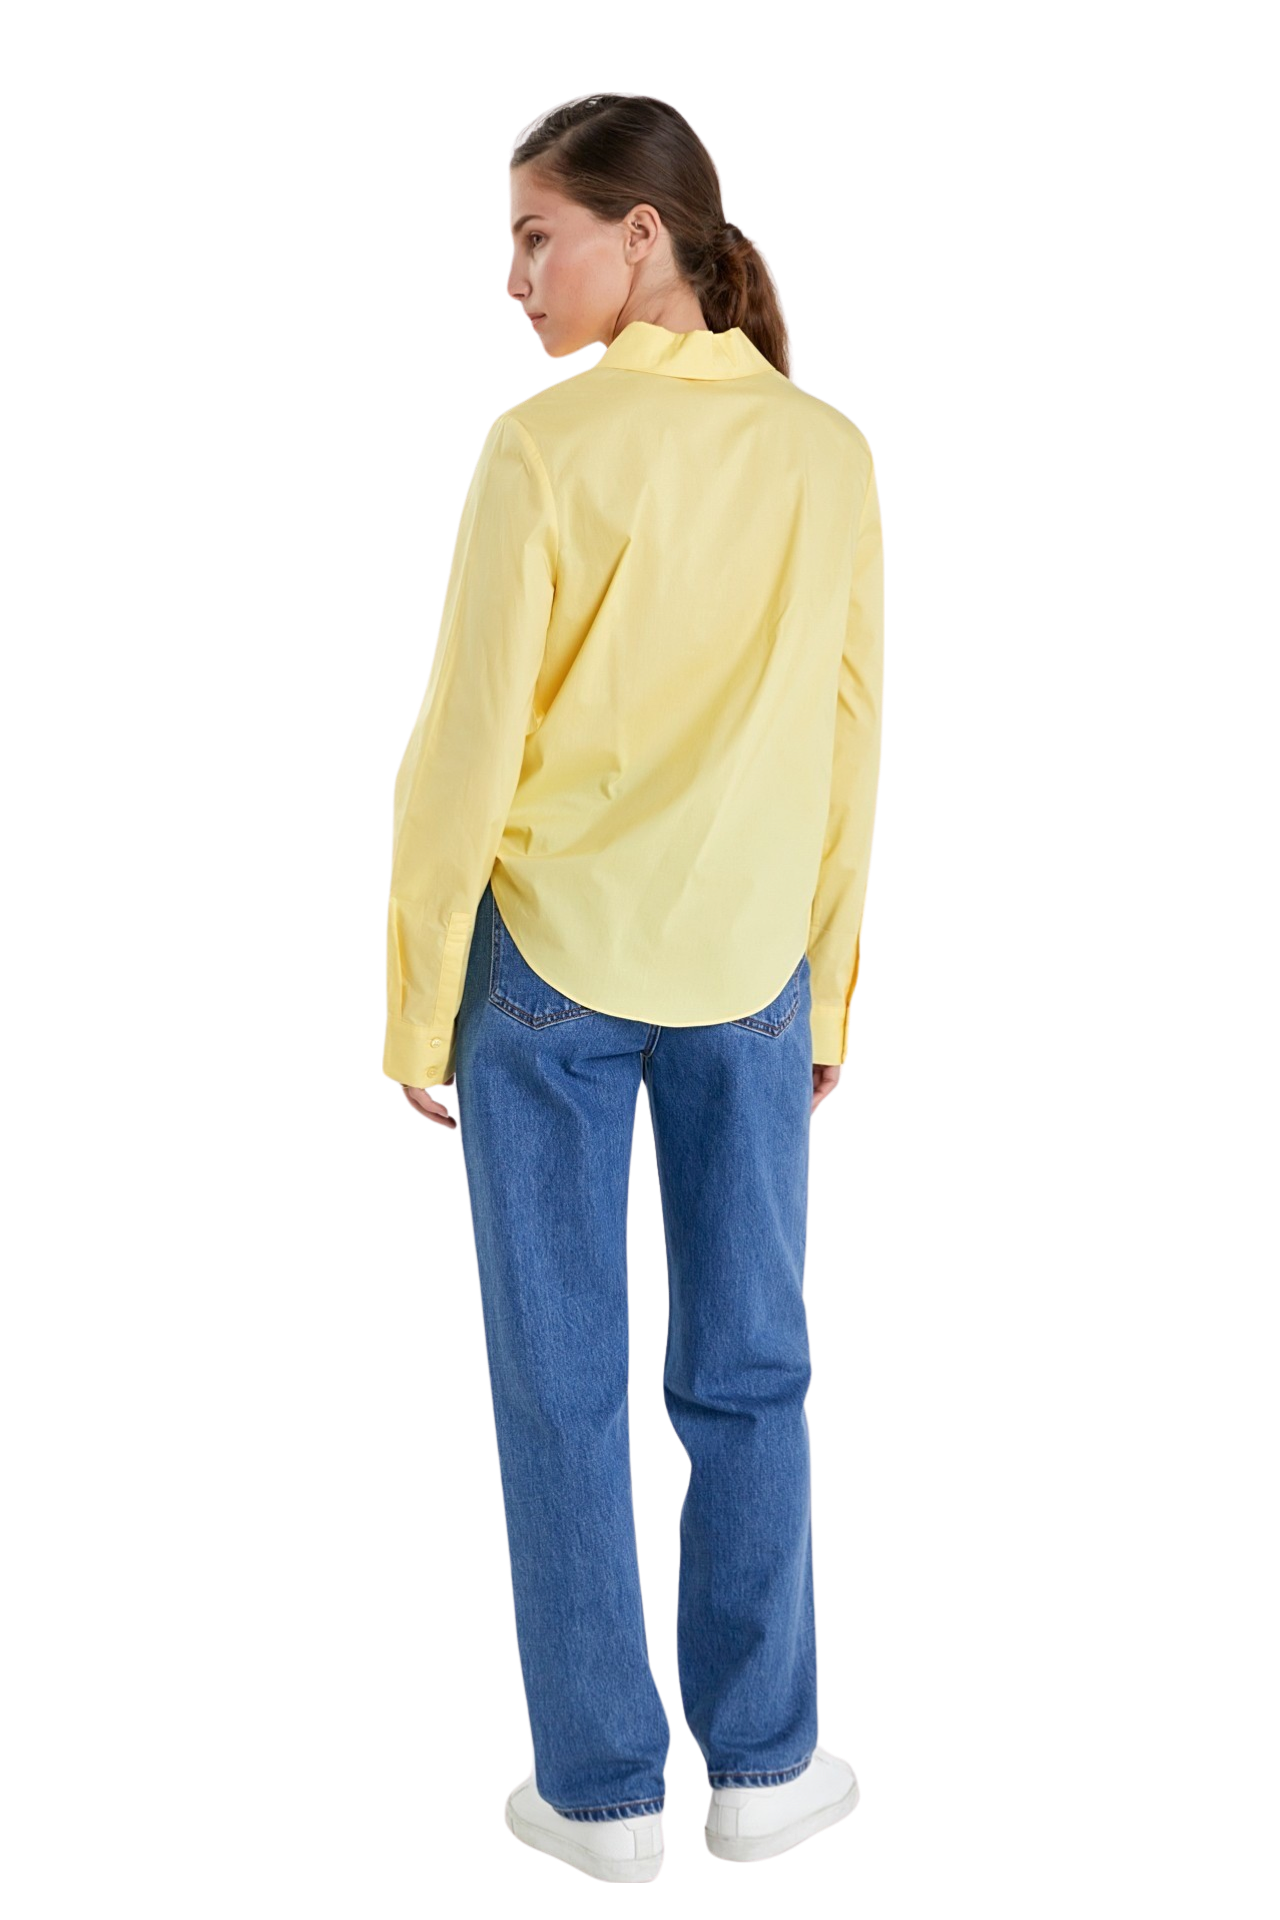 Apparel- English Factory Accent Collar Poplin Dress Shirt